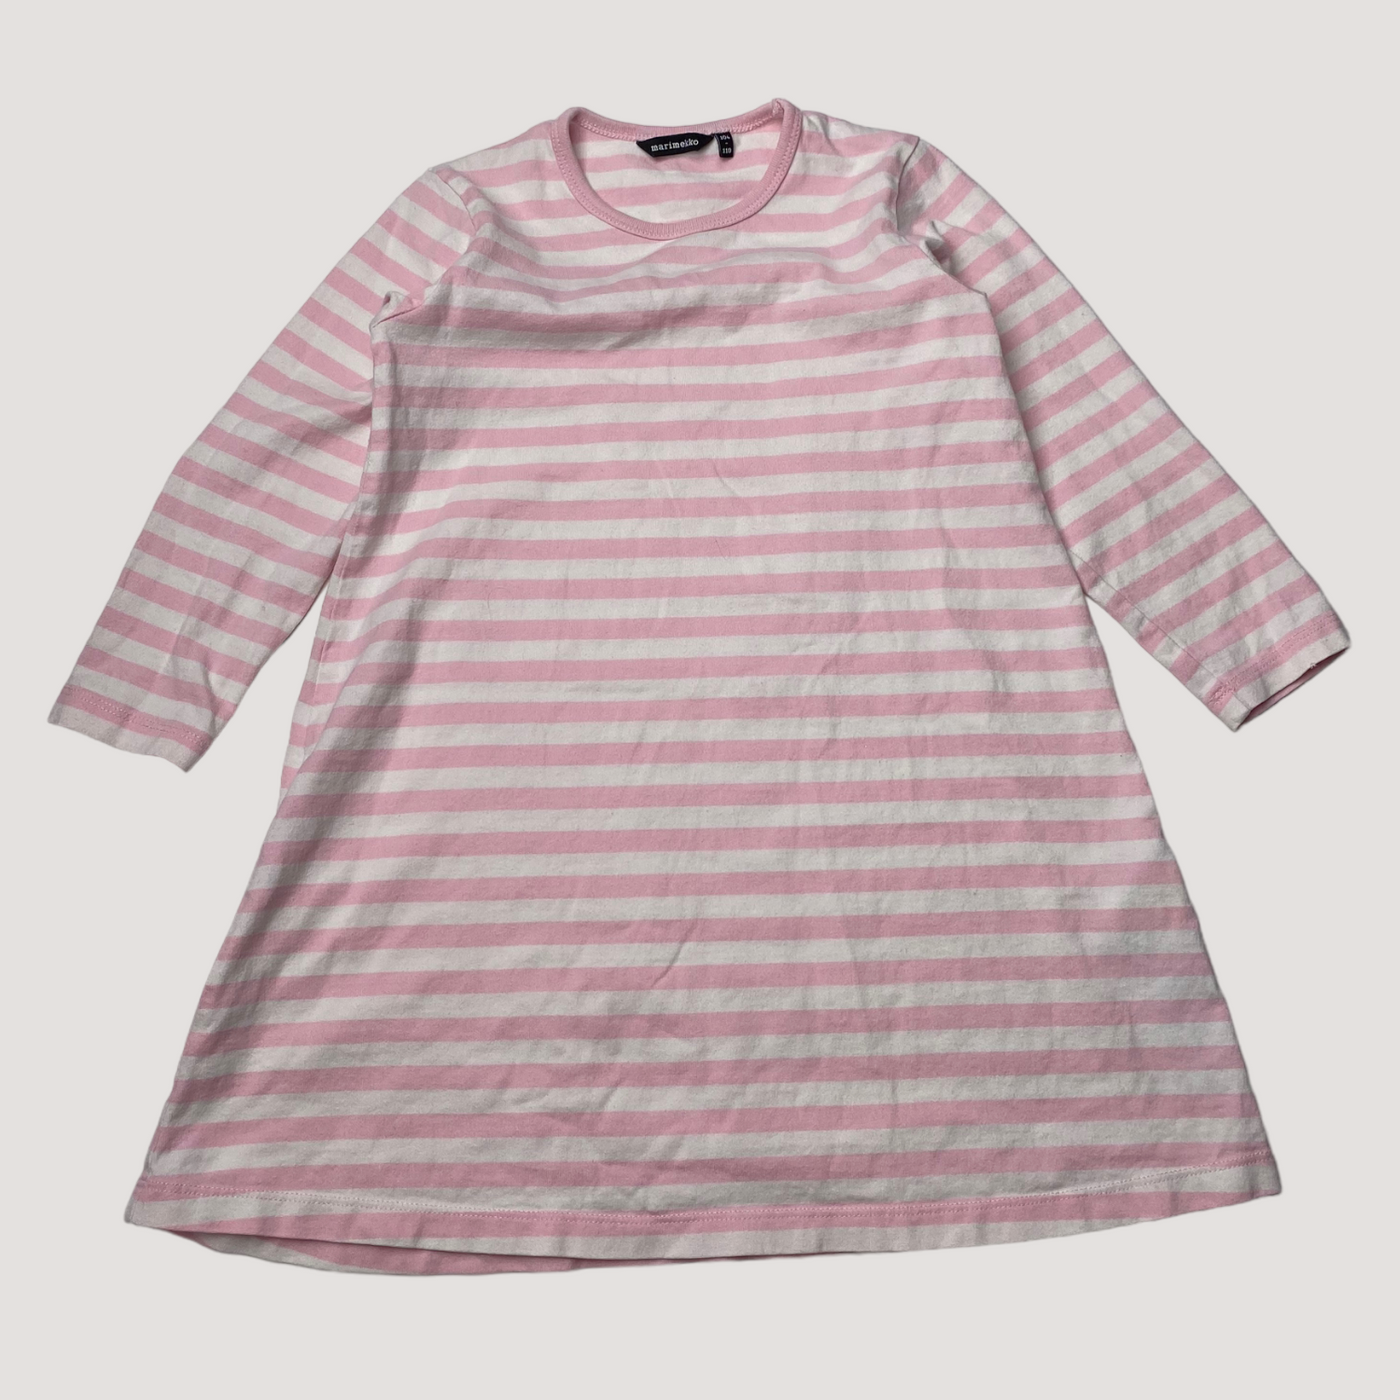 Marimekko stripe dress, pink/white | 104/110cm